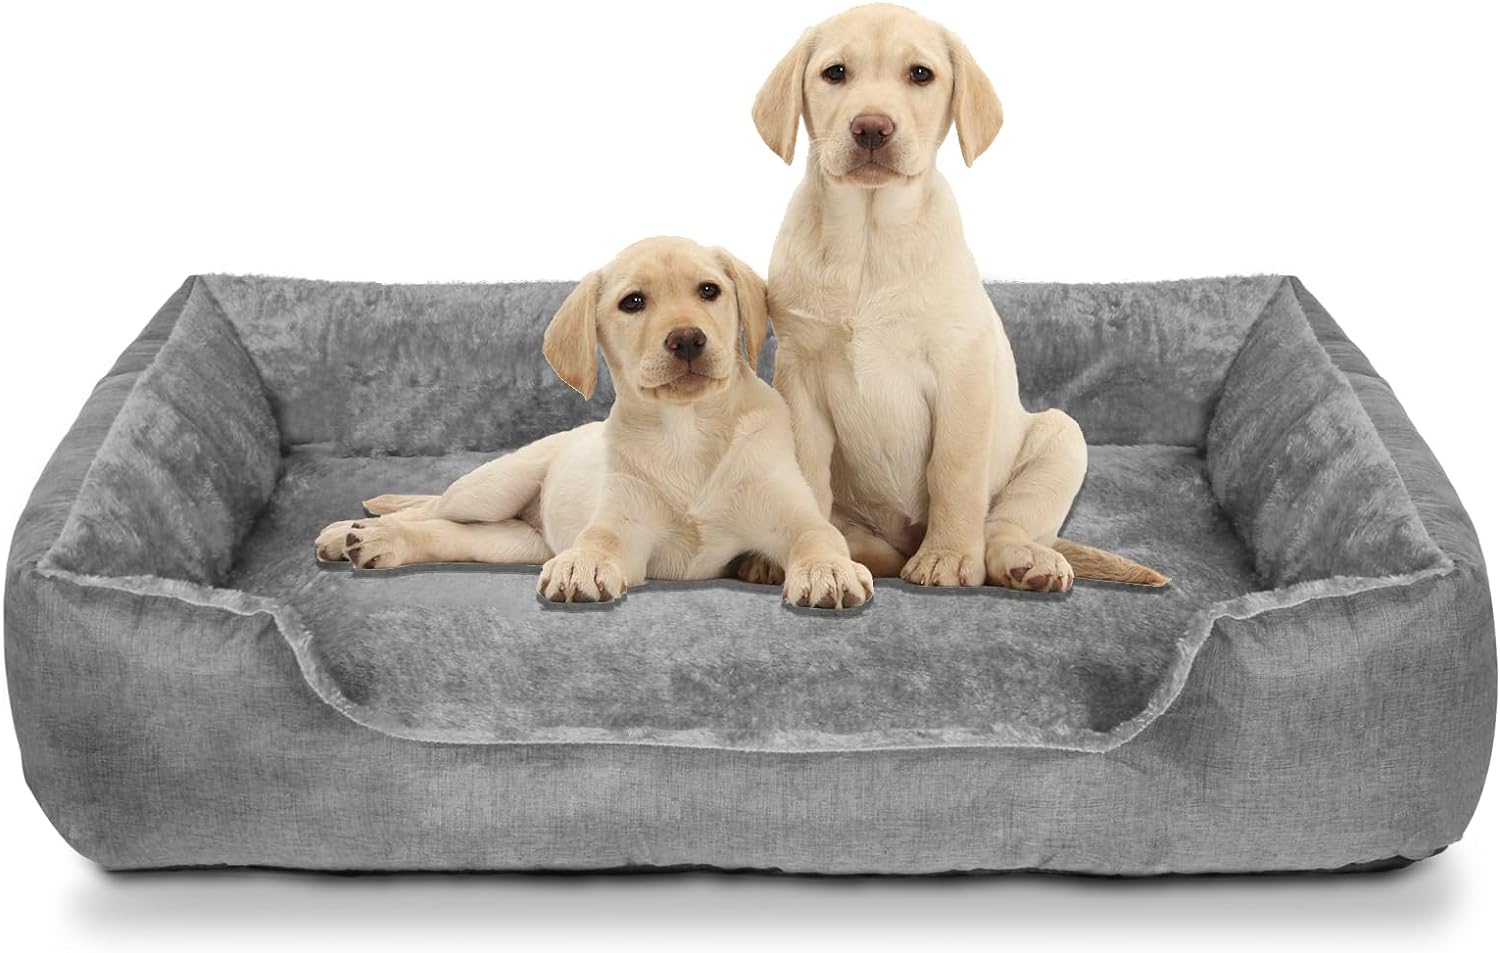 Cama para perros grandes, cama extraíble para perros separables e impermeables,